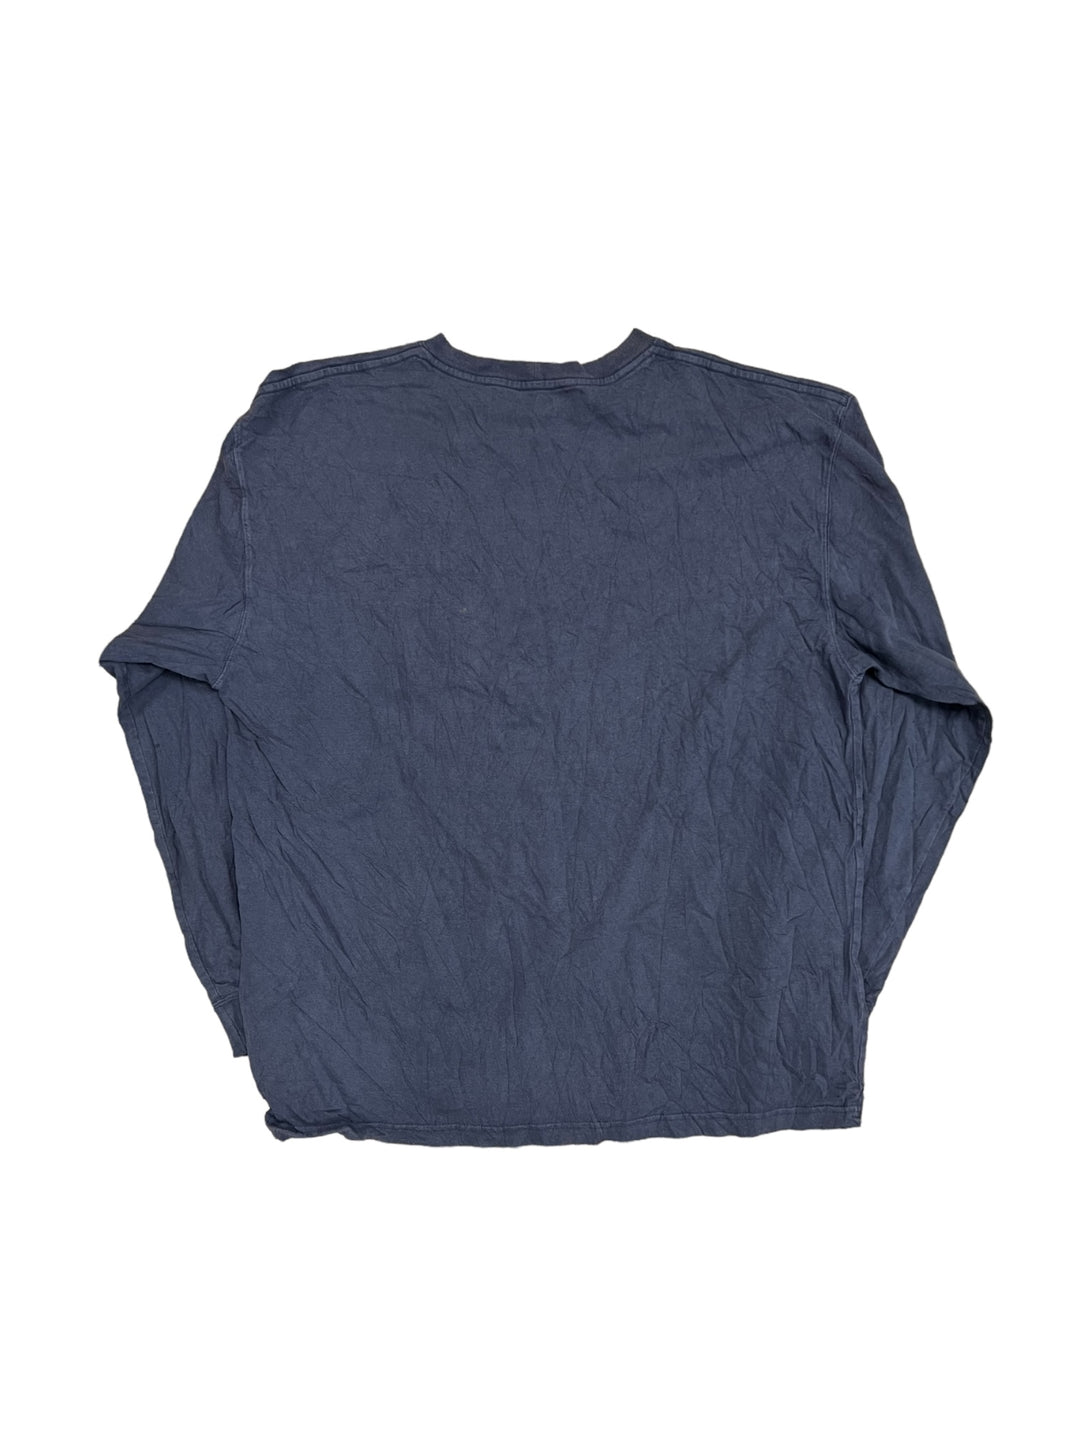 Carhartt workwear vintage long sleeve shirt men’s large